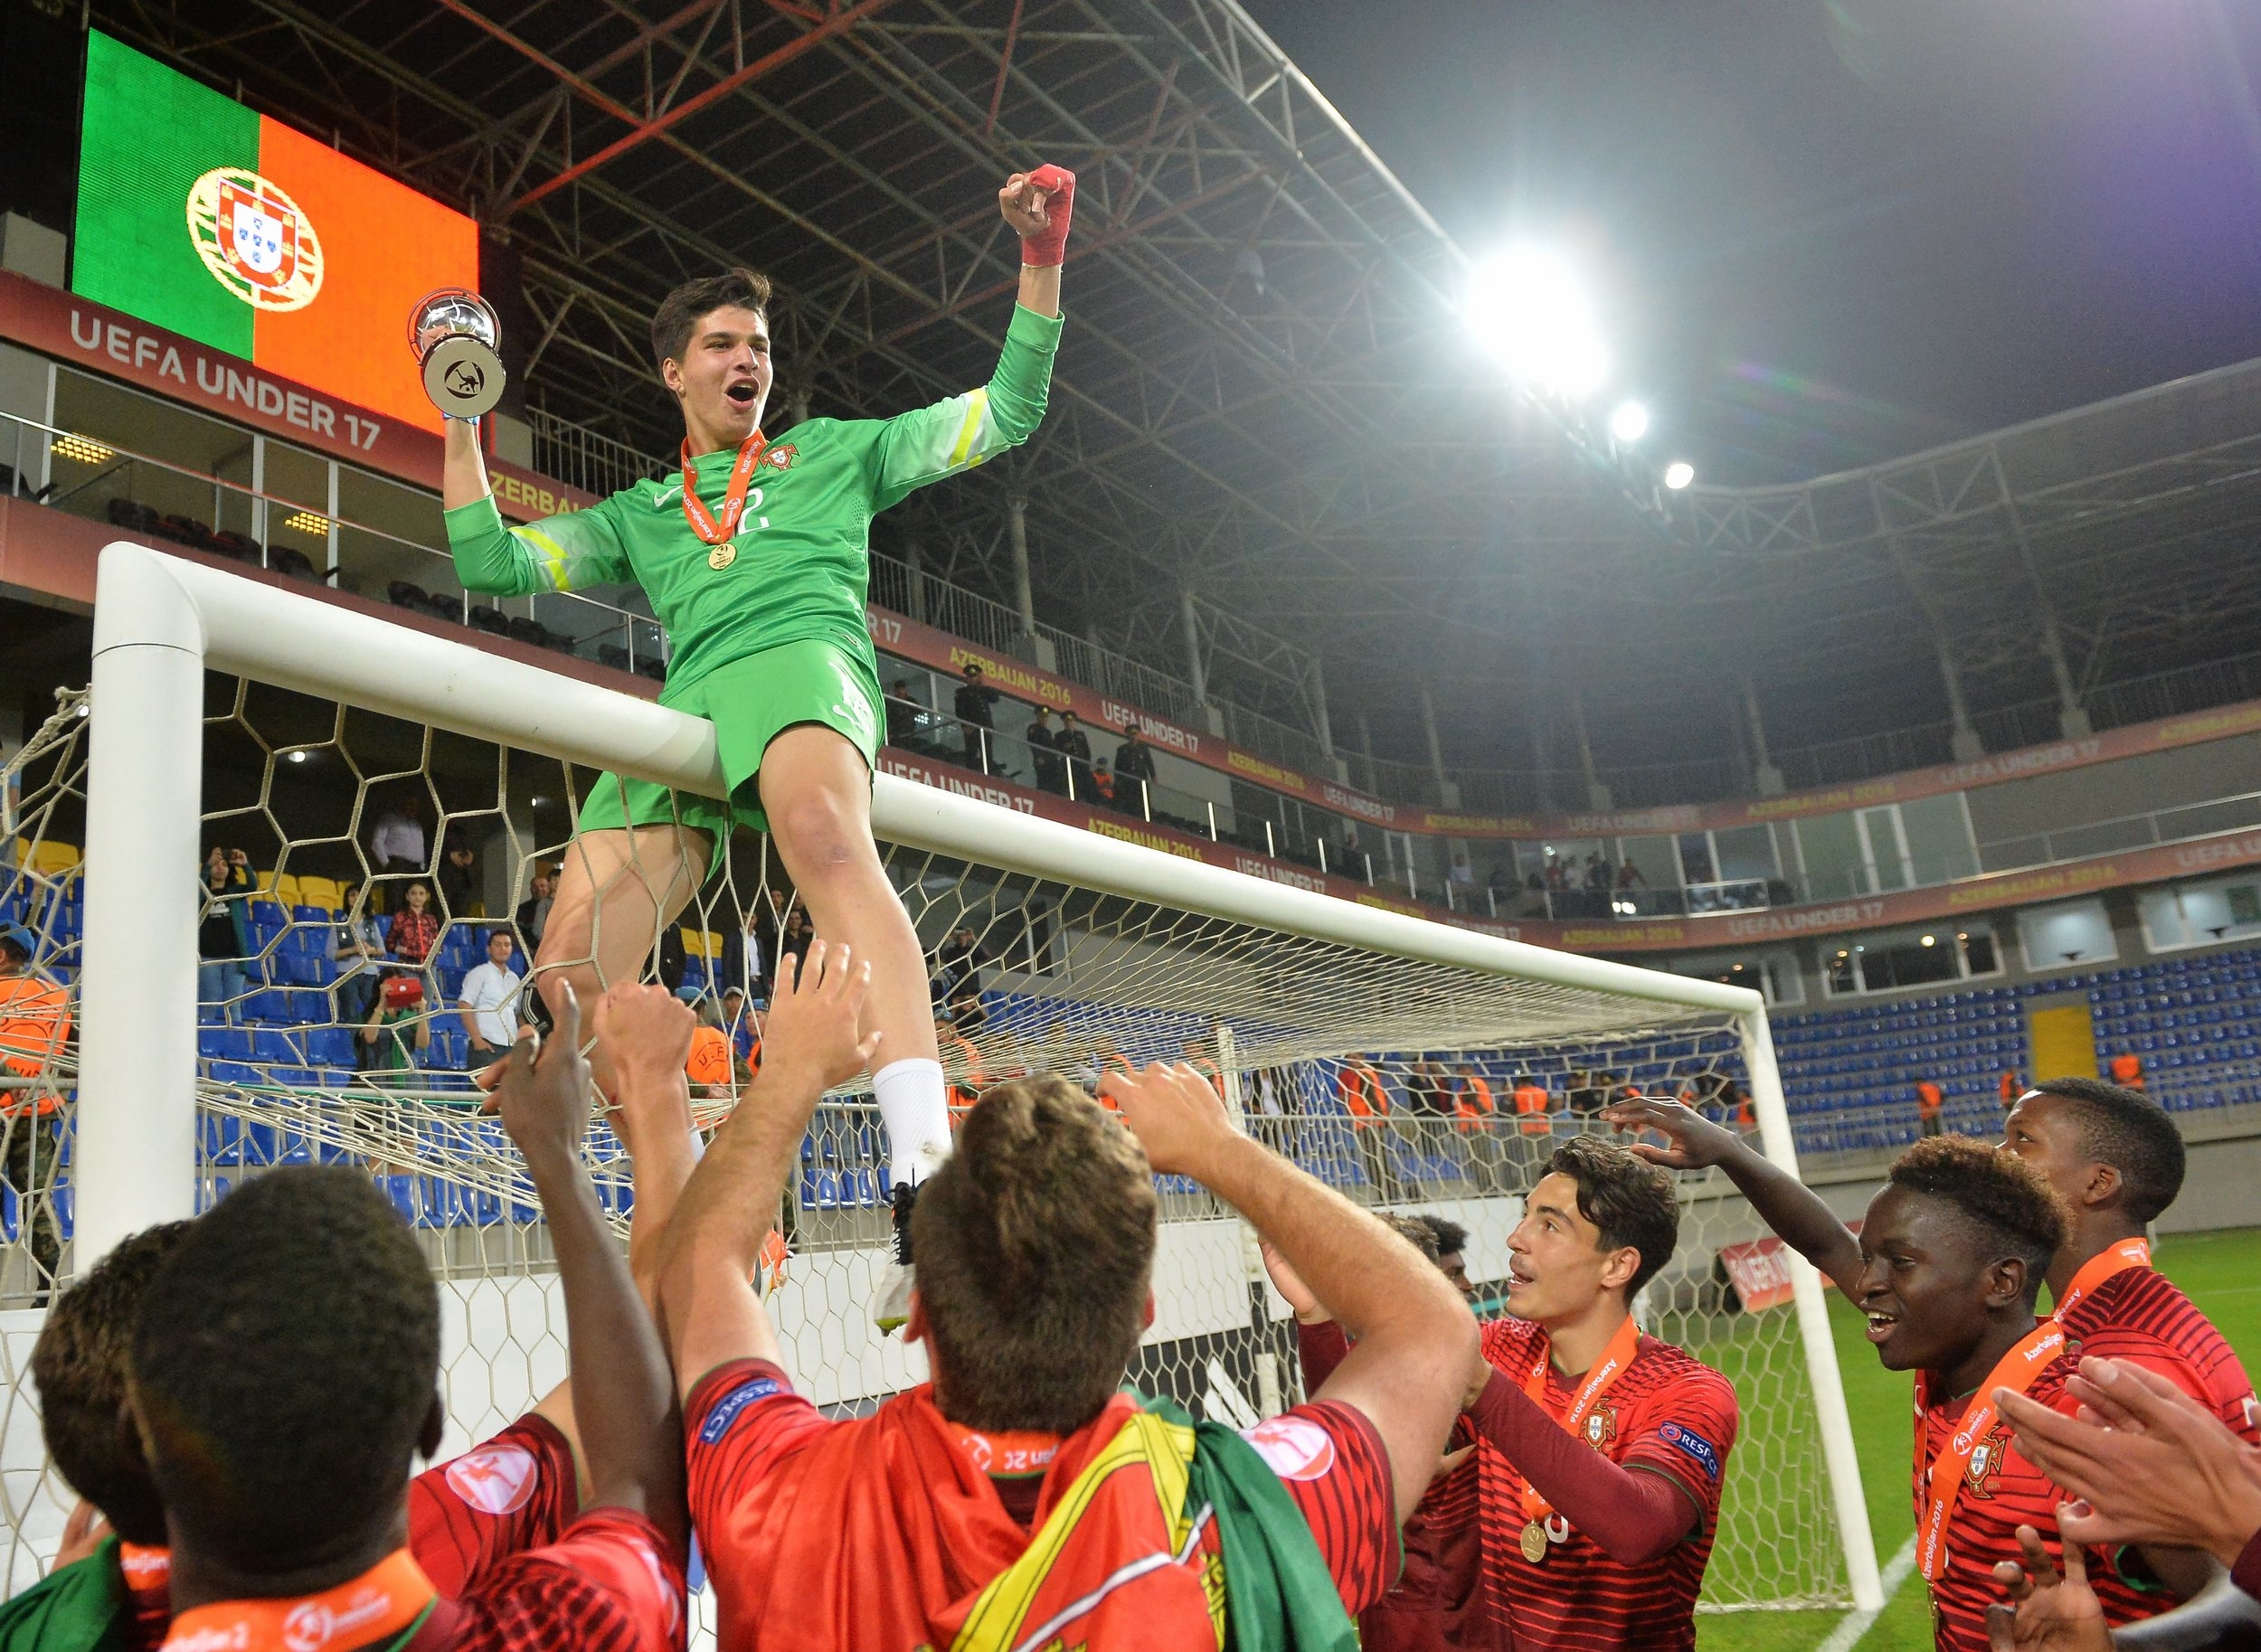  Portugal goalkeeper Joao Virginia celebrates victory against Spain in Azerbaijan 2016 /  UEFA / Sportsfile  